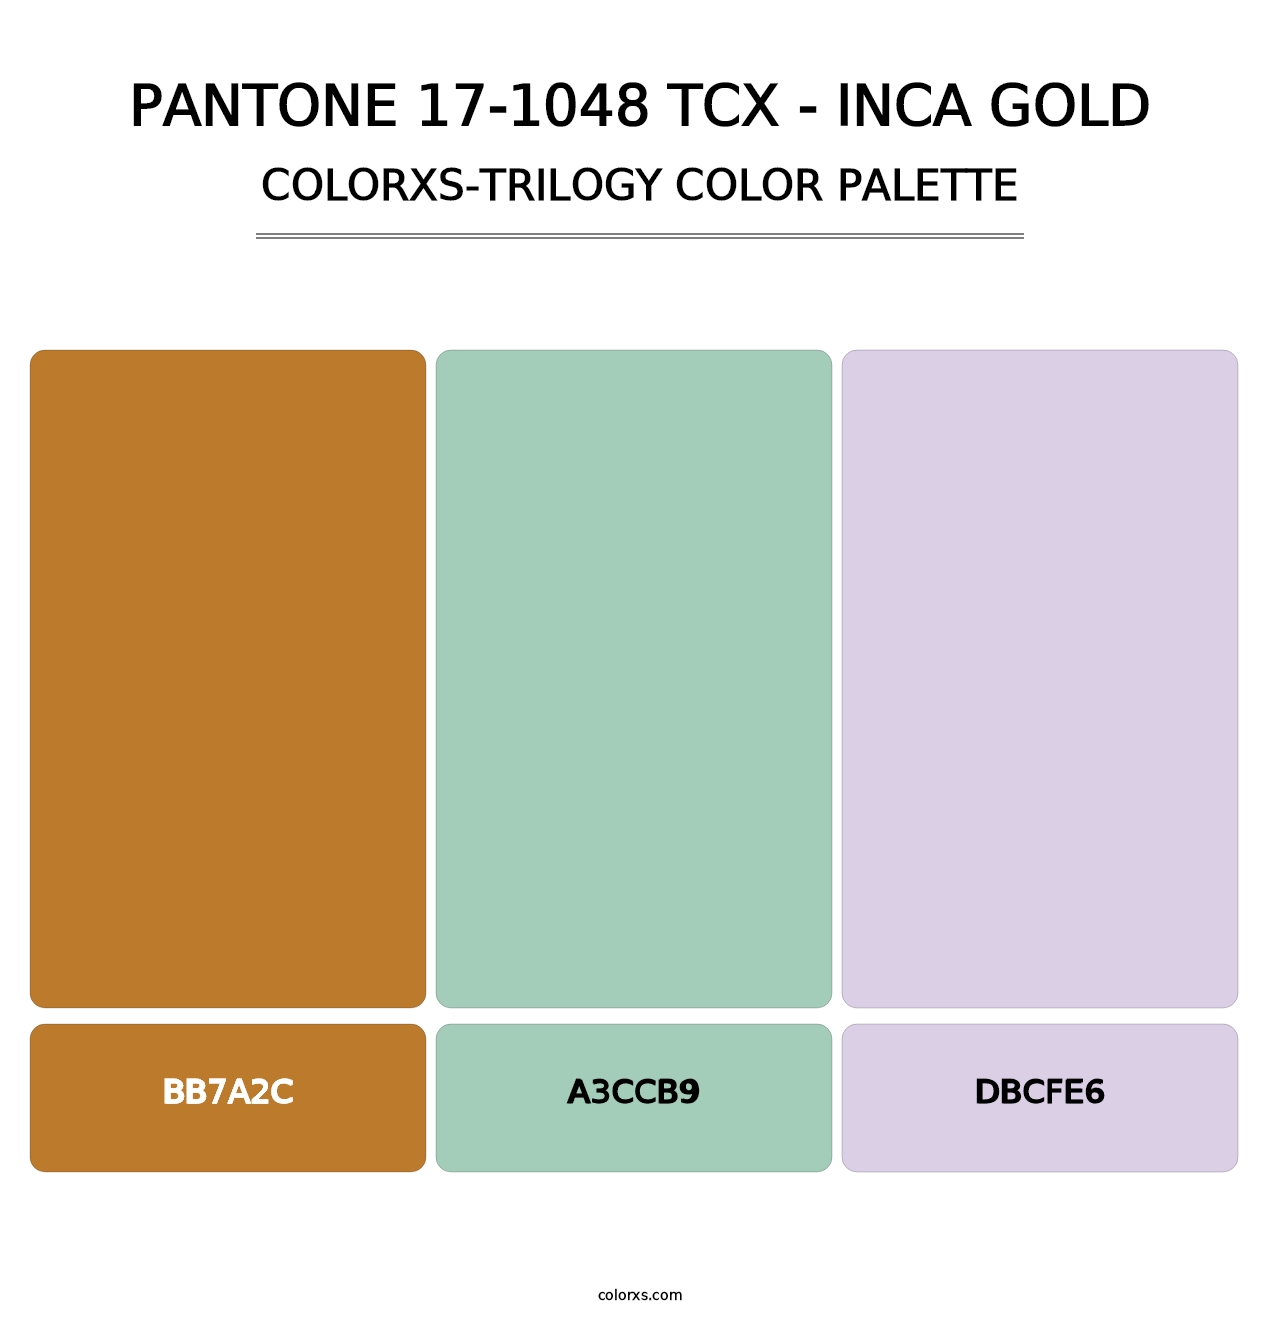 PANTONE 17-1048 TCX - Inca Gold - Colorxs Trilogy Palette